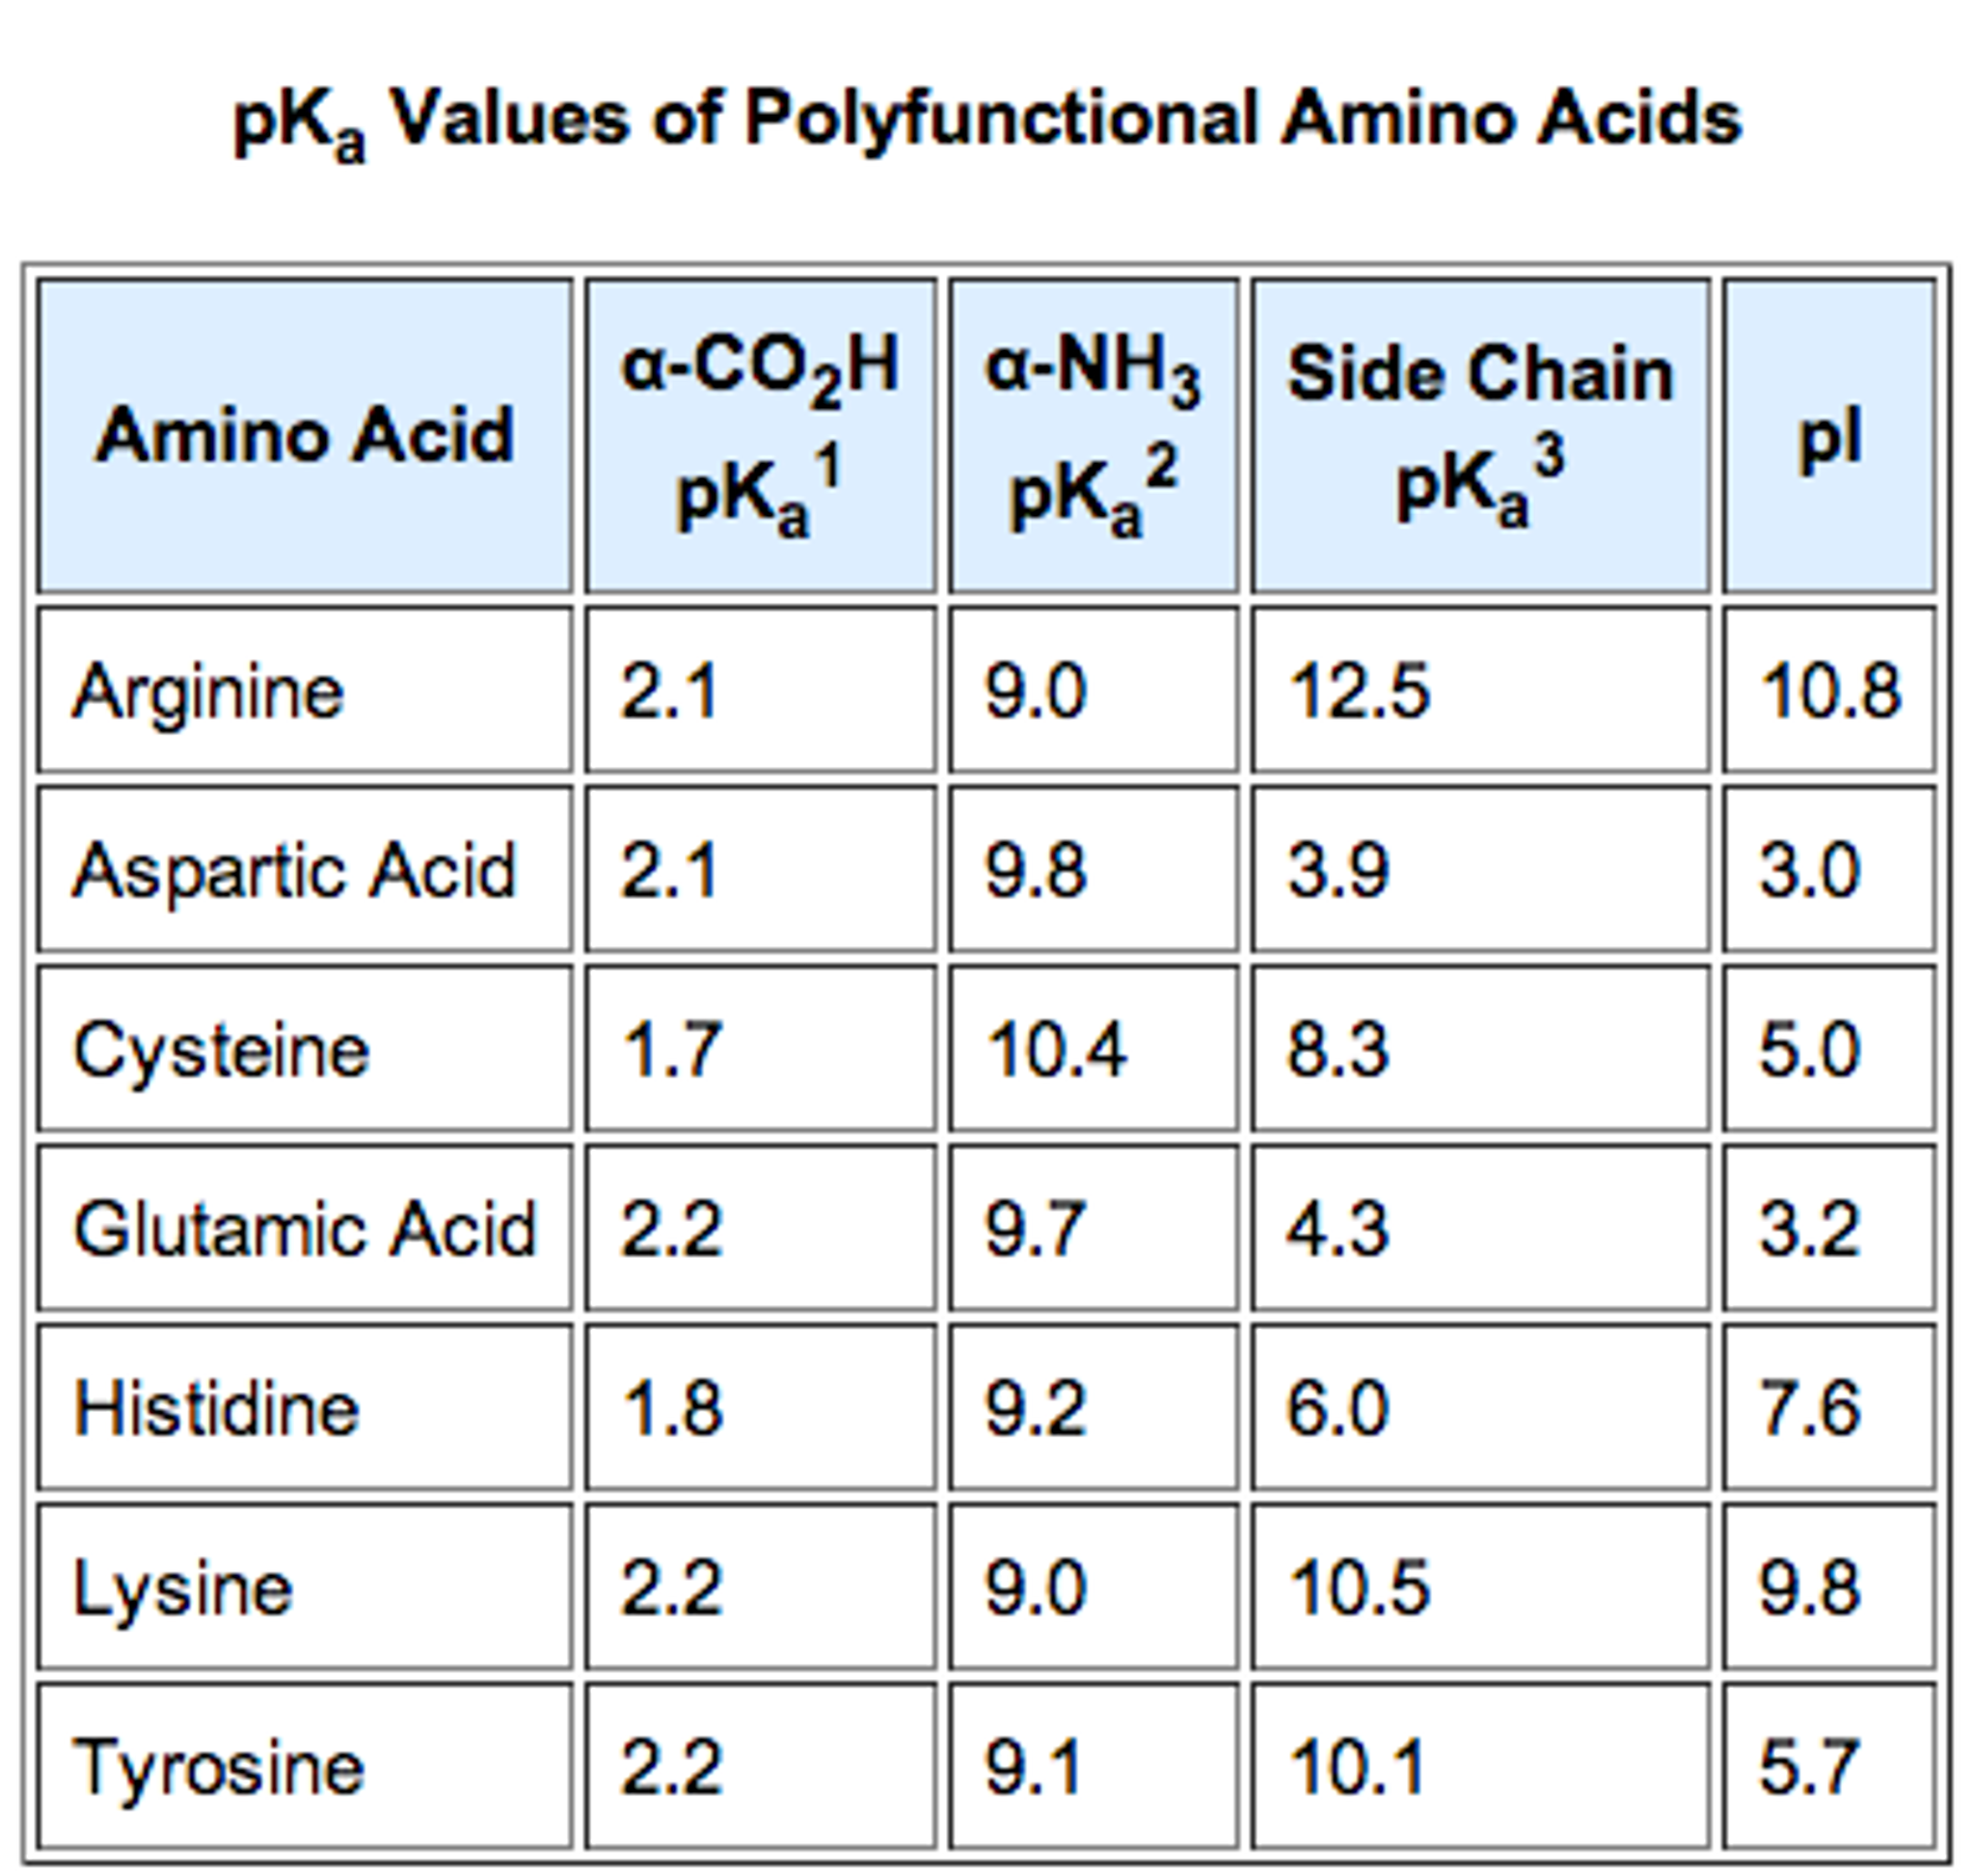 calculate pi of amino acid chain